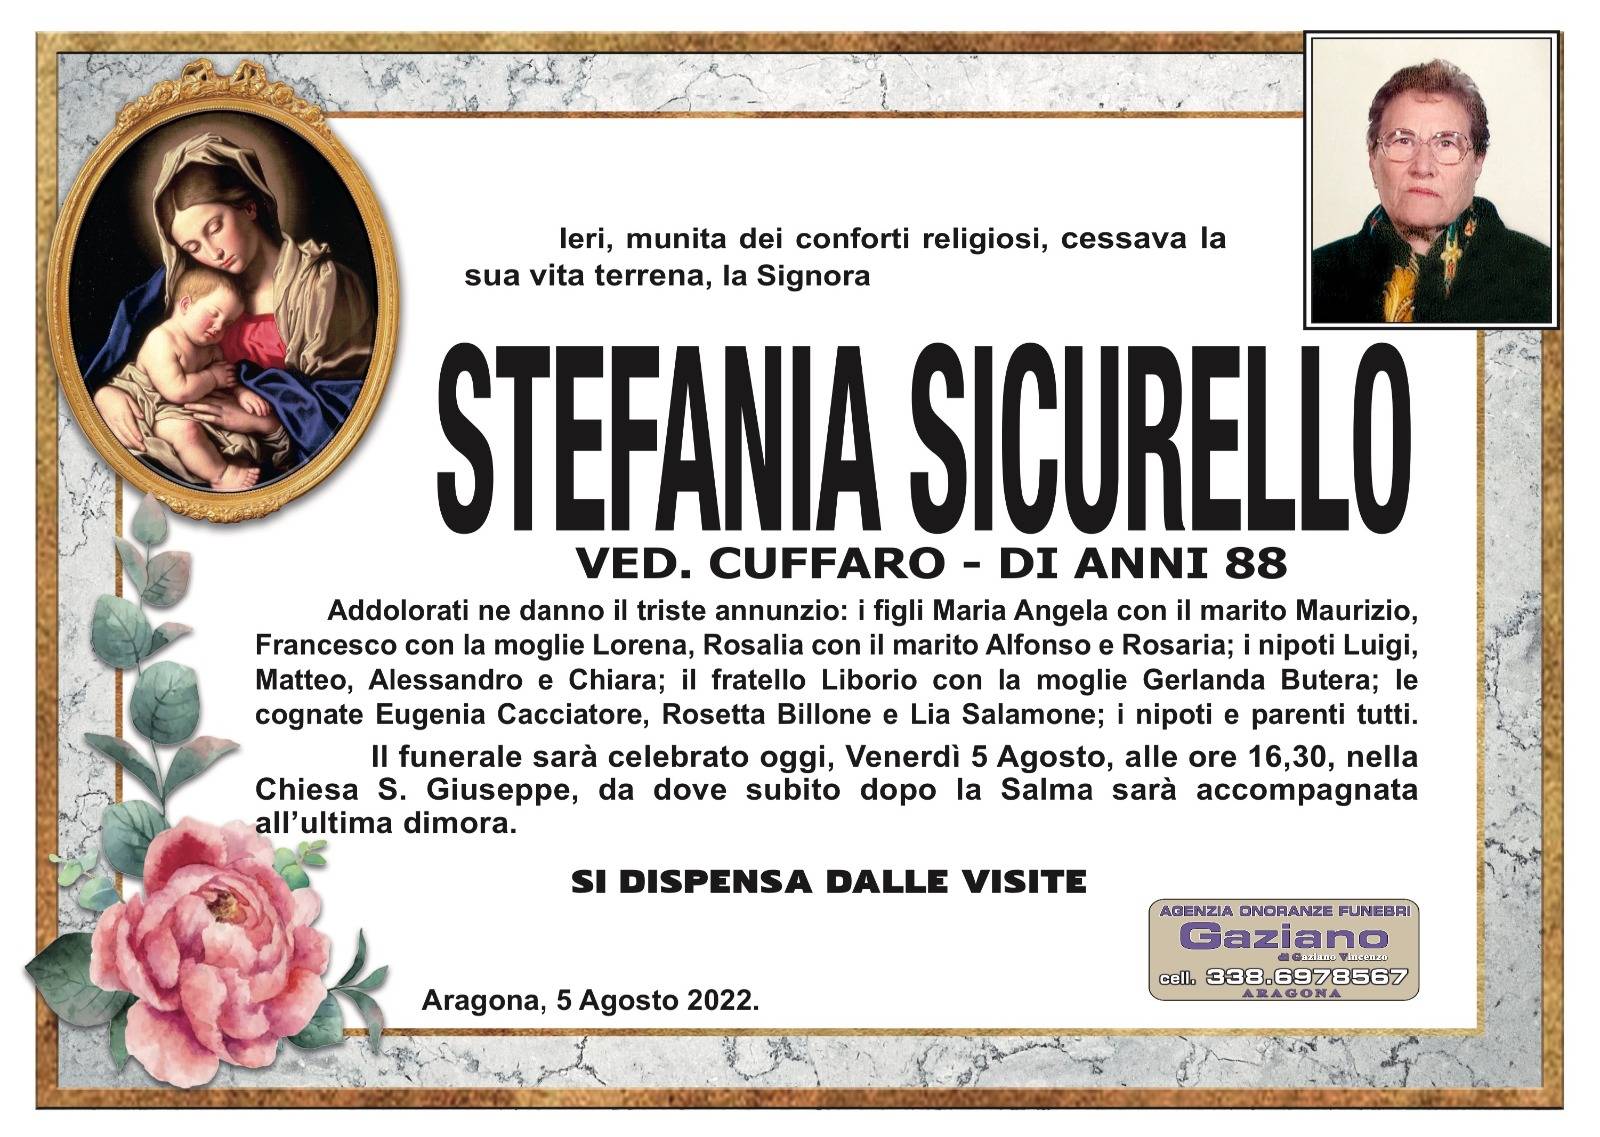 Stefania Sicurello